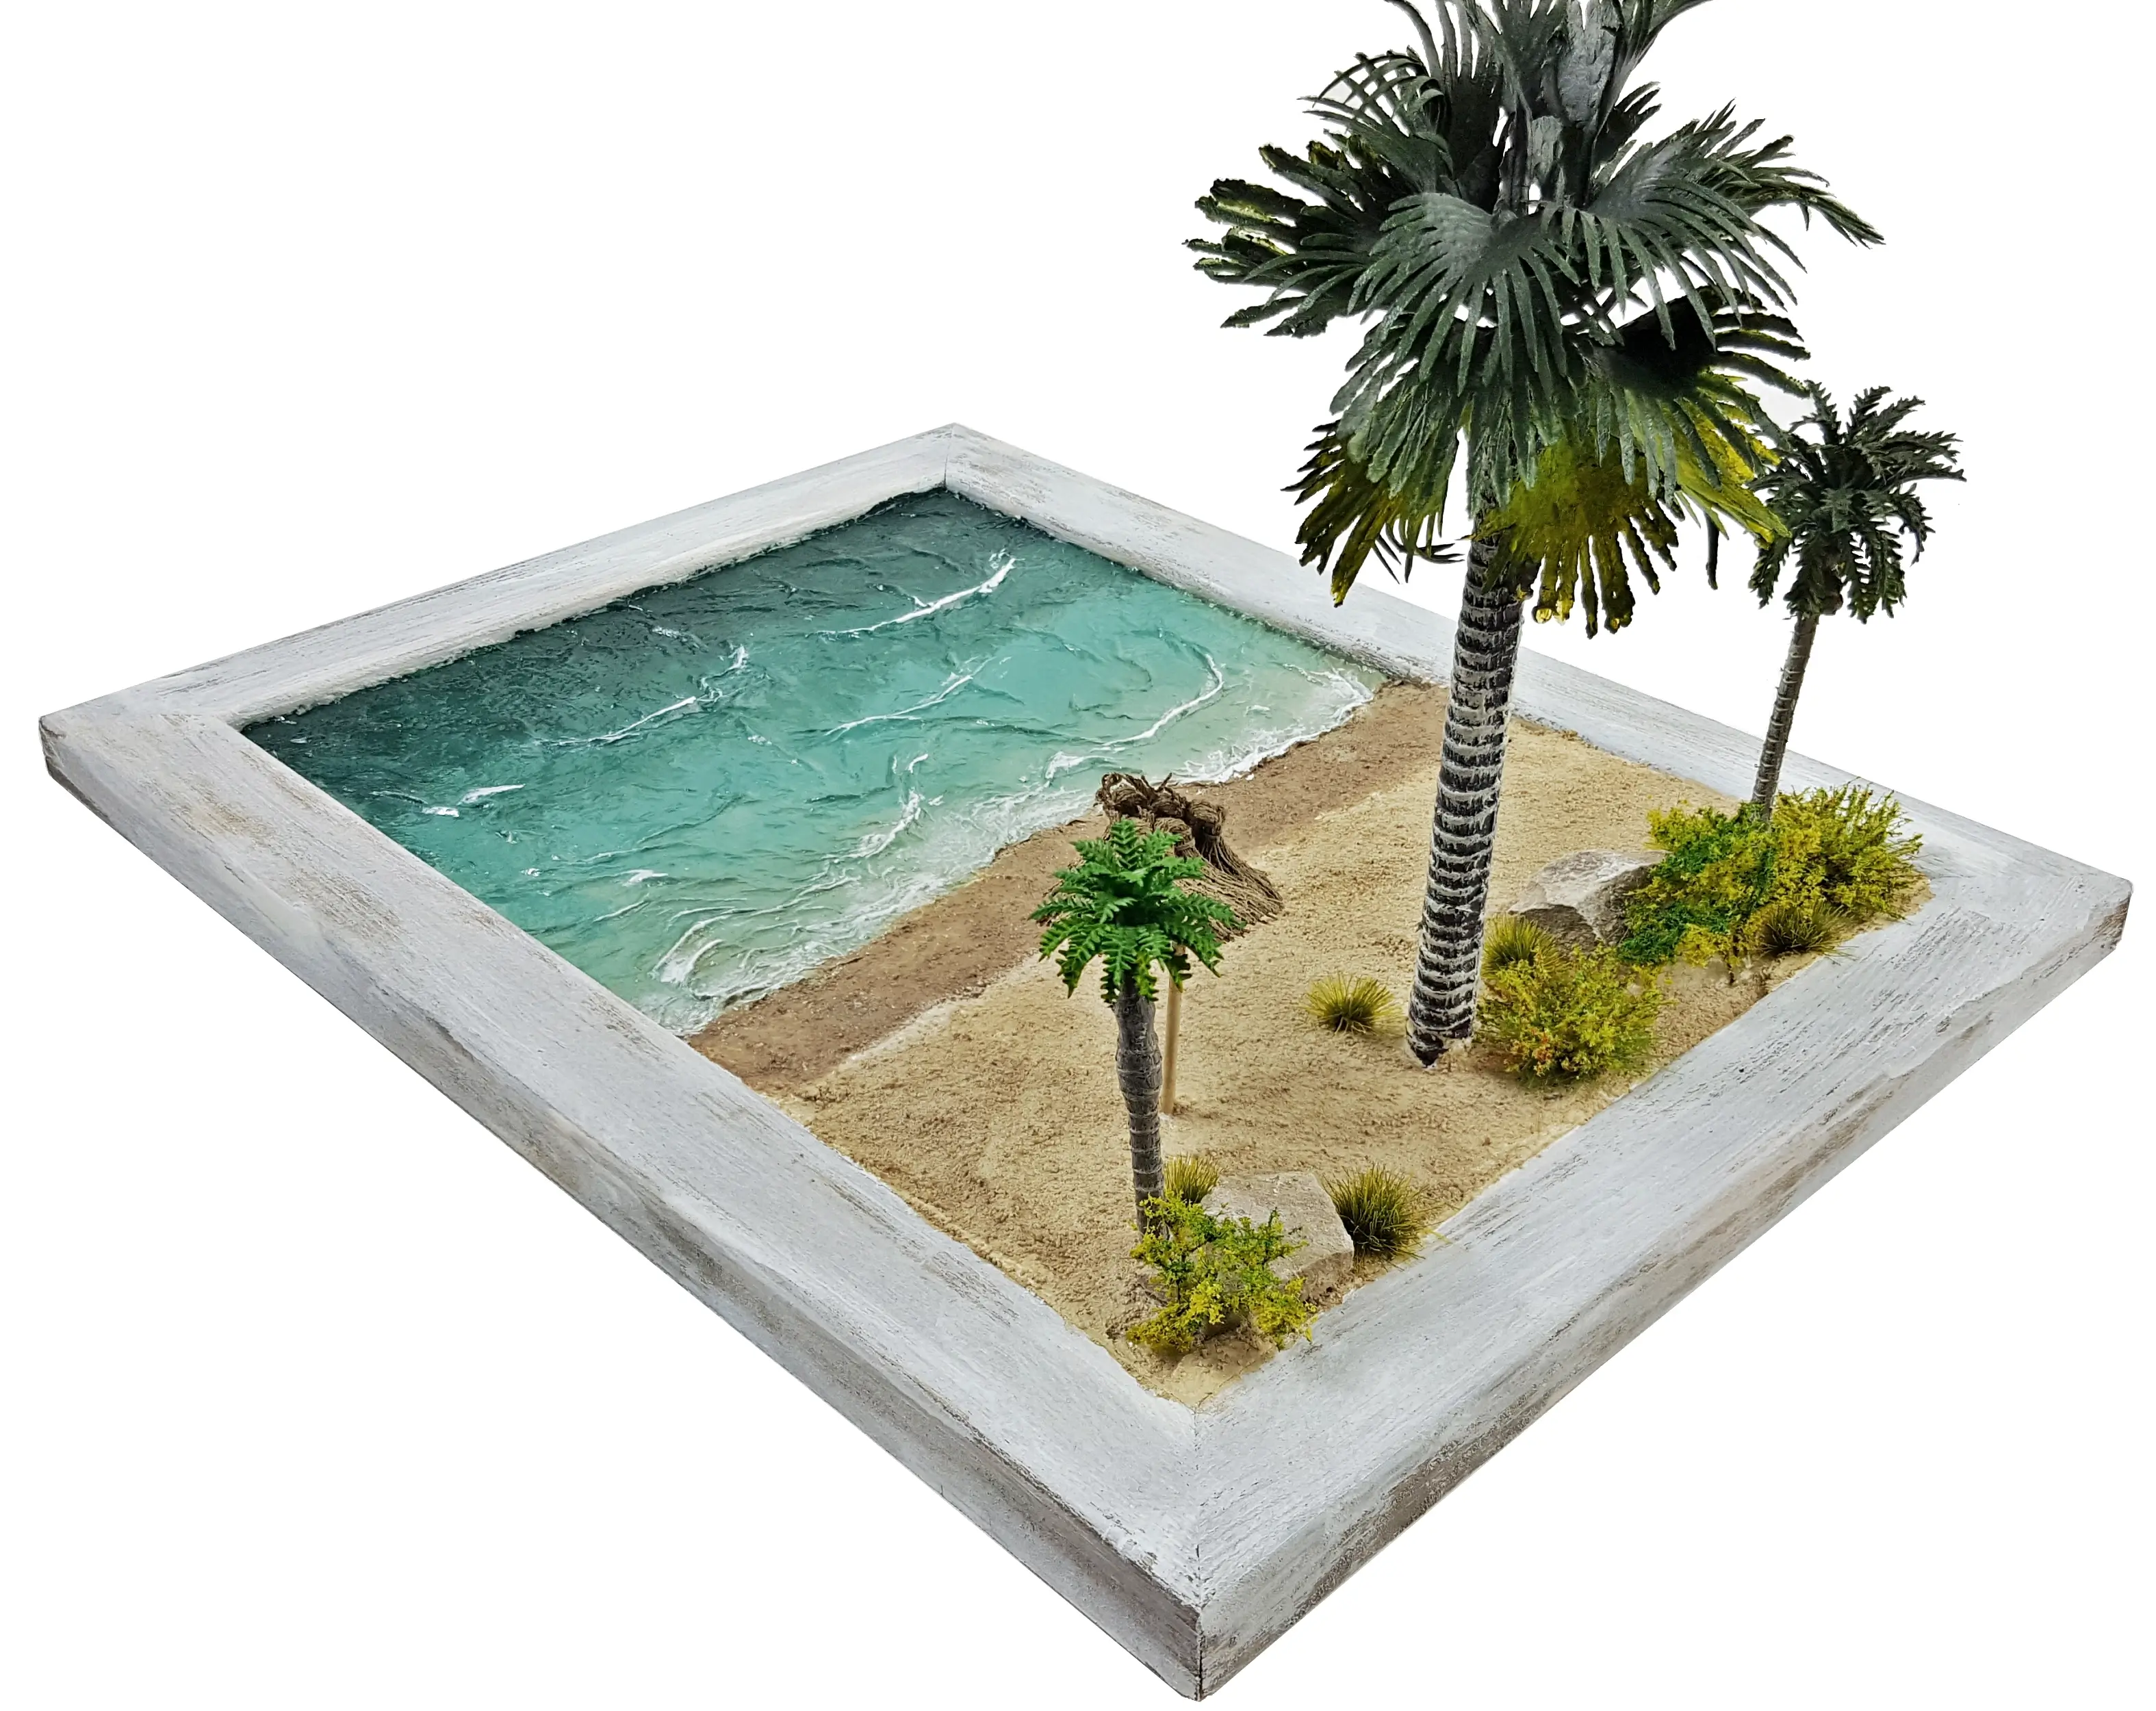 Amazing diorama of tropical beach